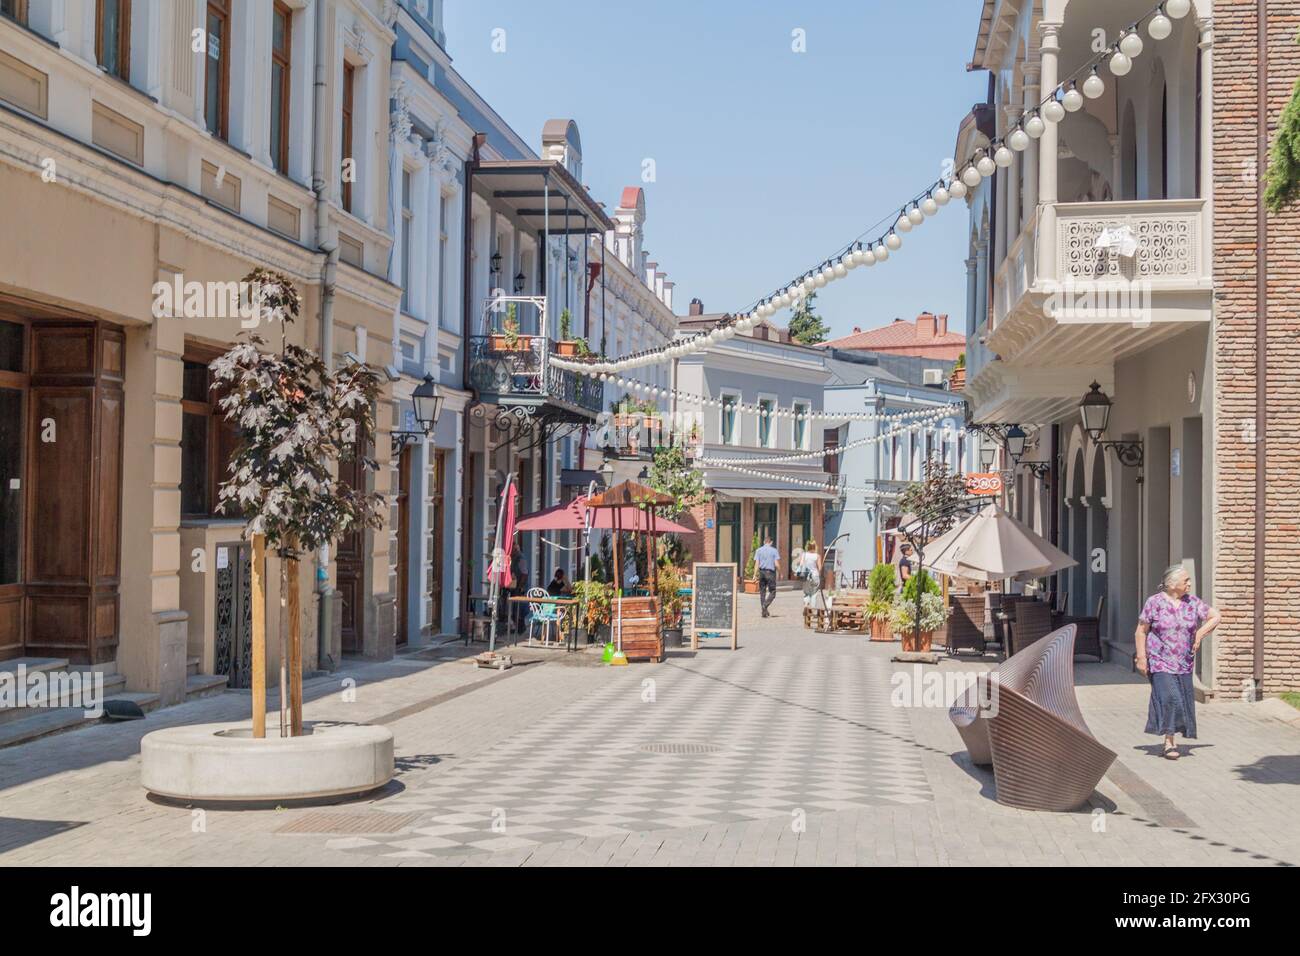 TBILISI, GEORGIA - JULY 17, 2017: Pedestrian street in the Old town of Tbilisi, Georgia. Stock Photo